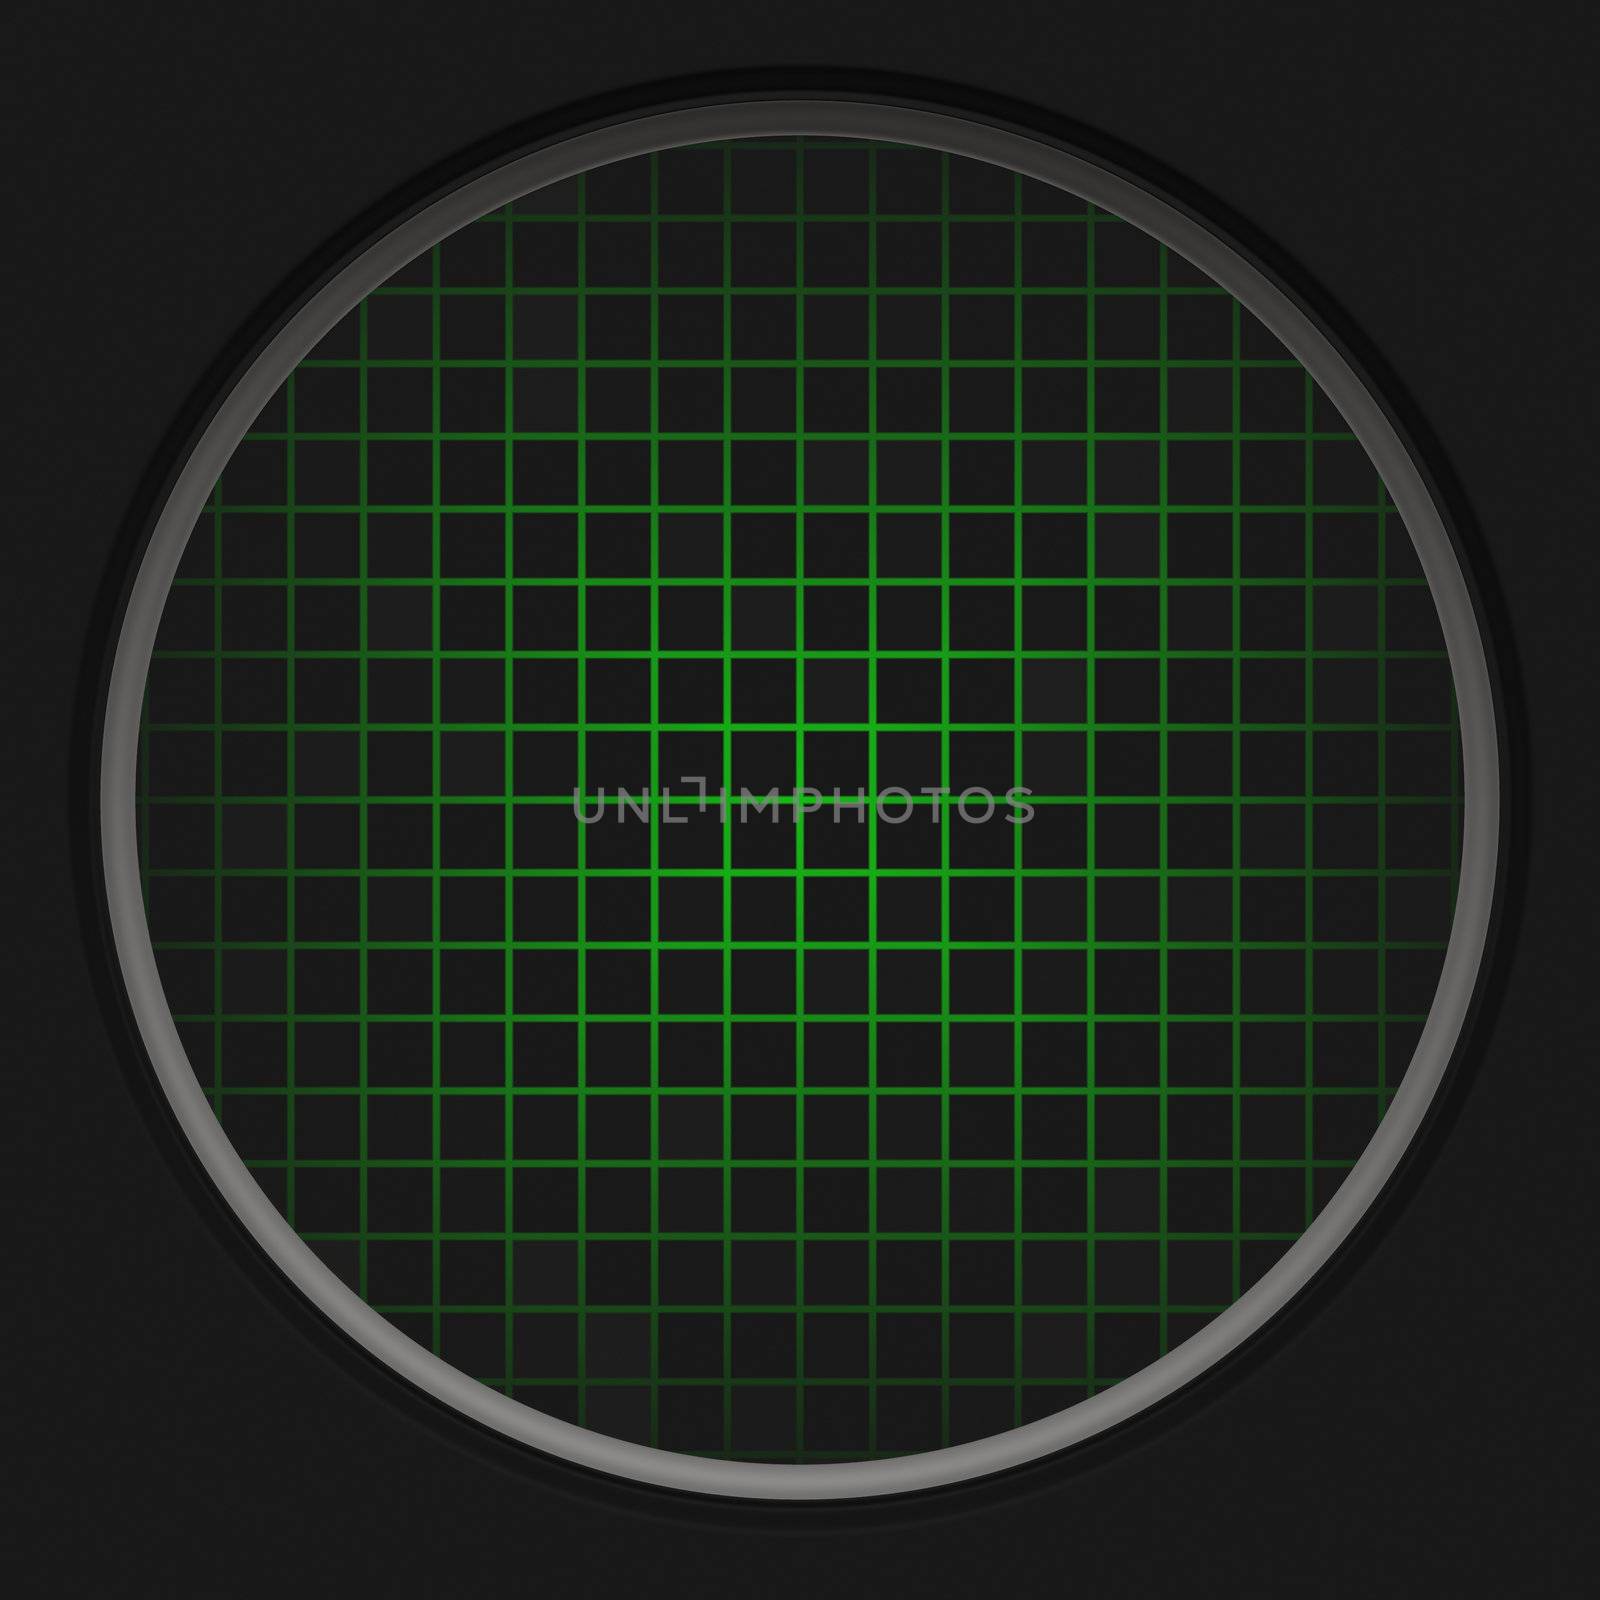 A circular radar grid background over black.